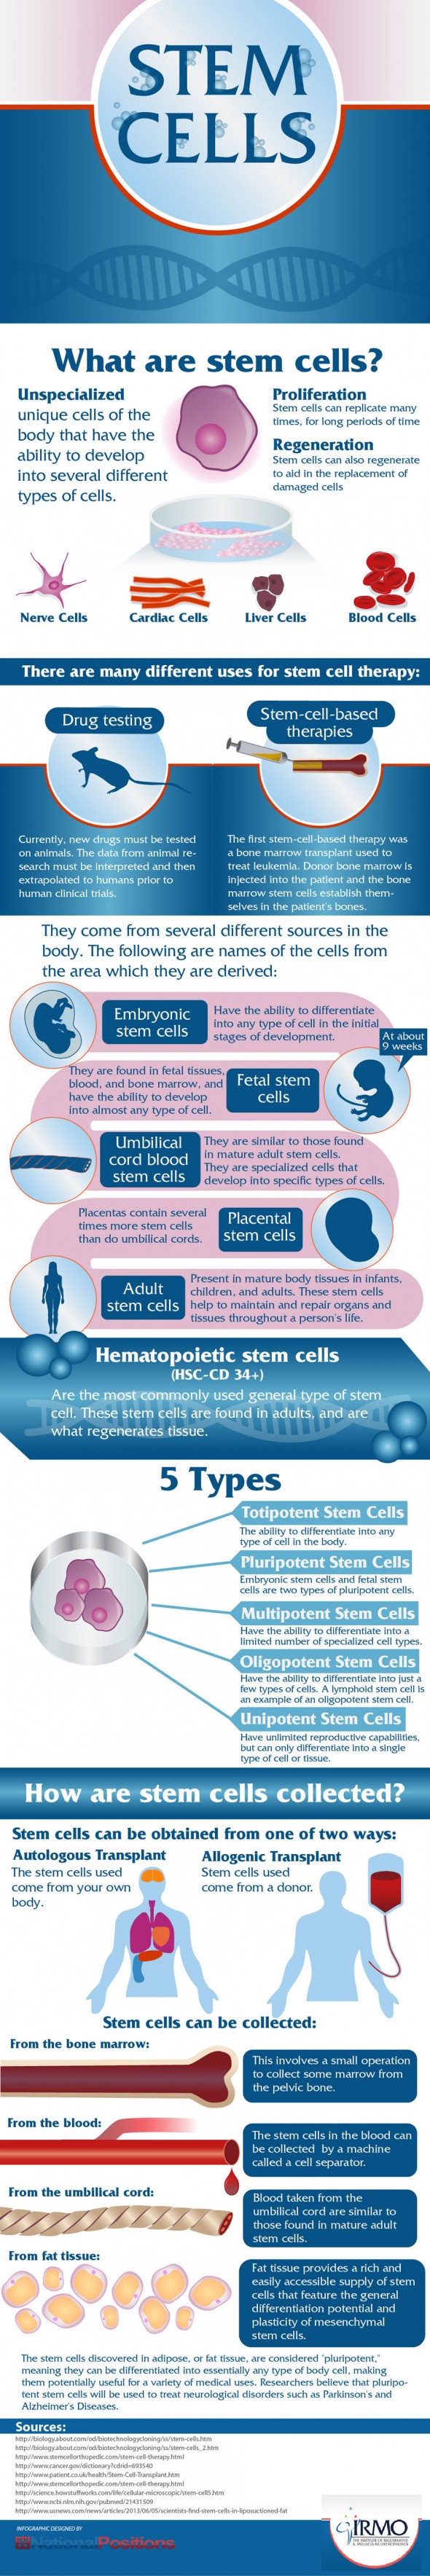 stem-cells-infographic-590x3536